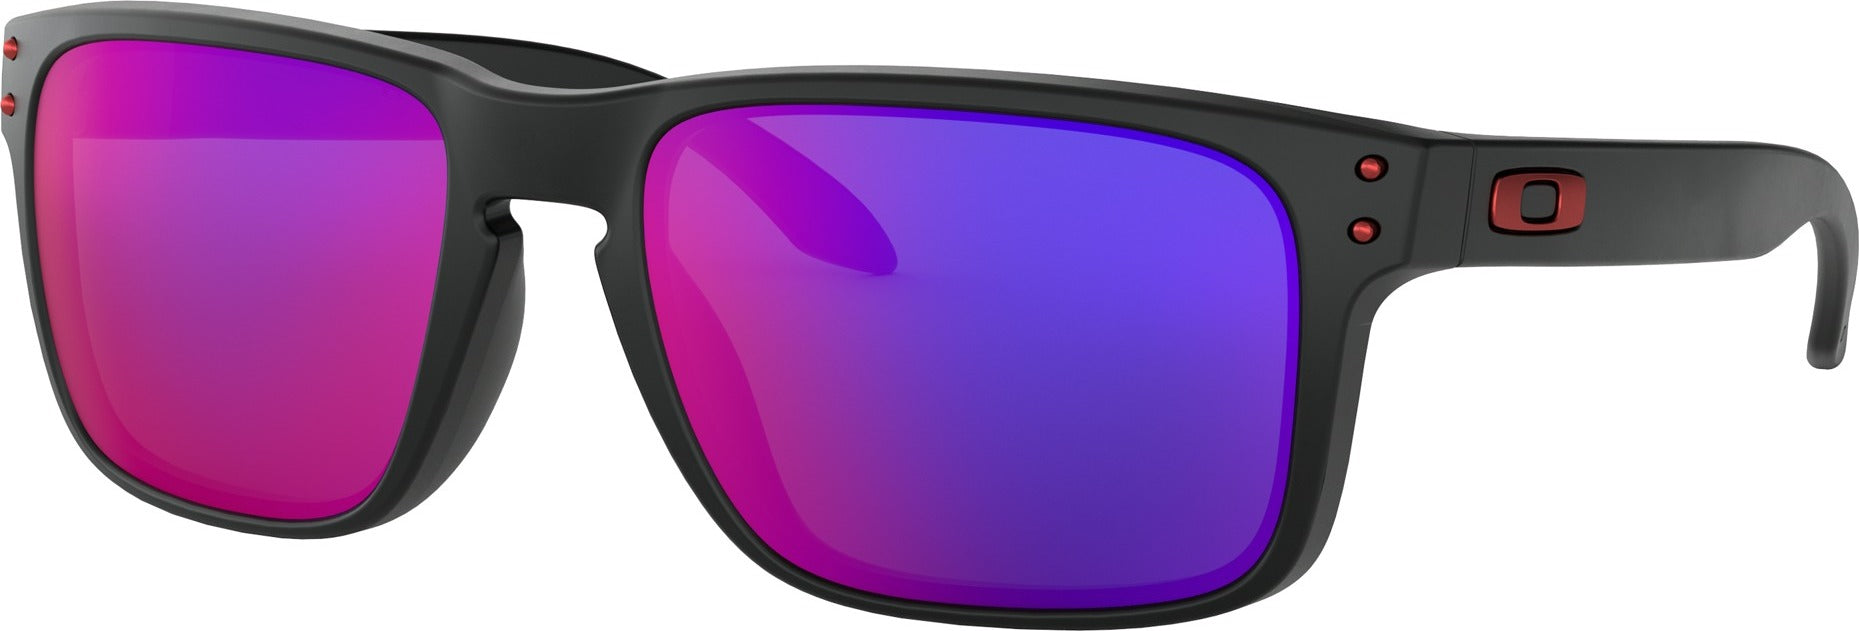 Oakley Holbrook Sunglasses - Matte Black - Positive Red Iridium Lens -  Men's | Altitude Sports